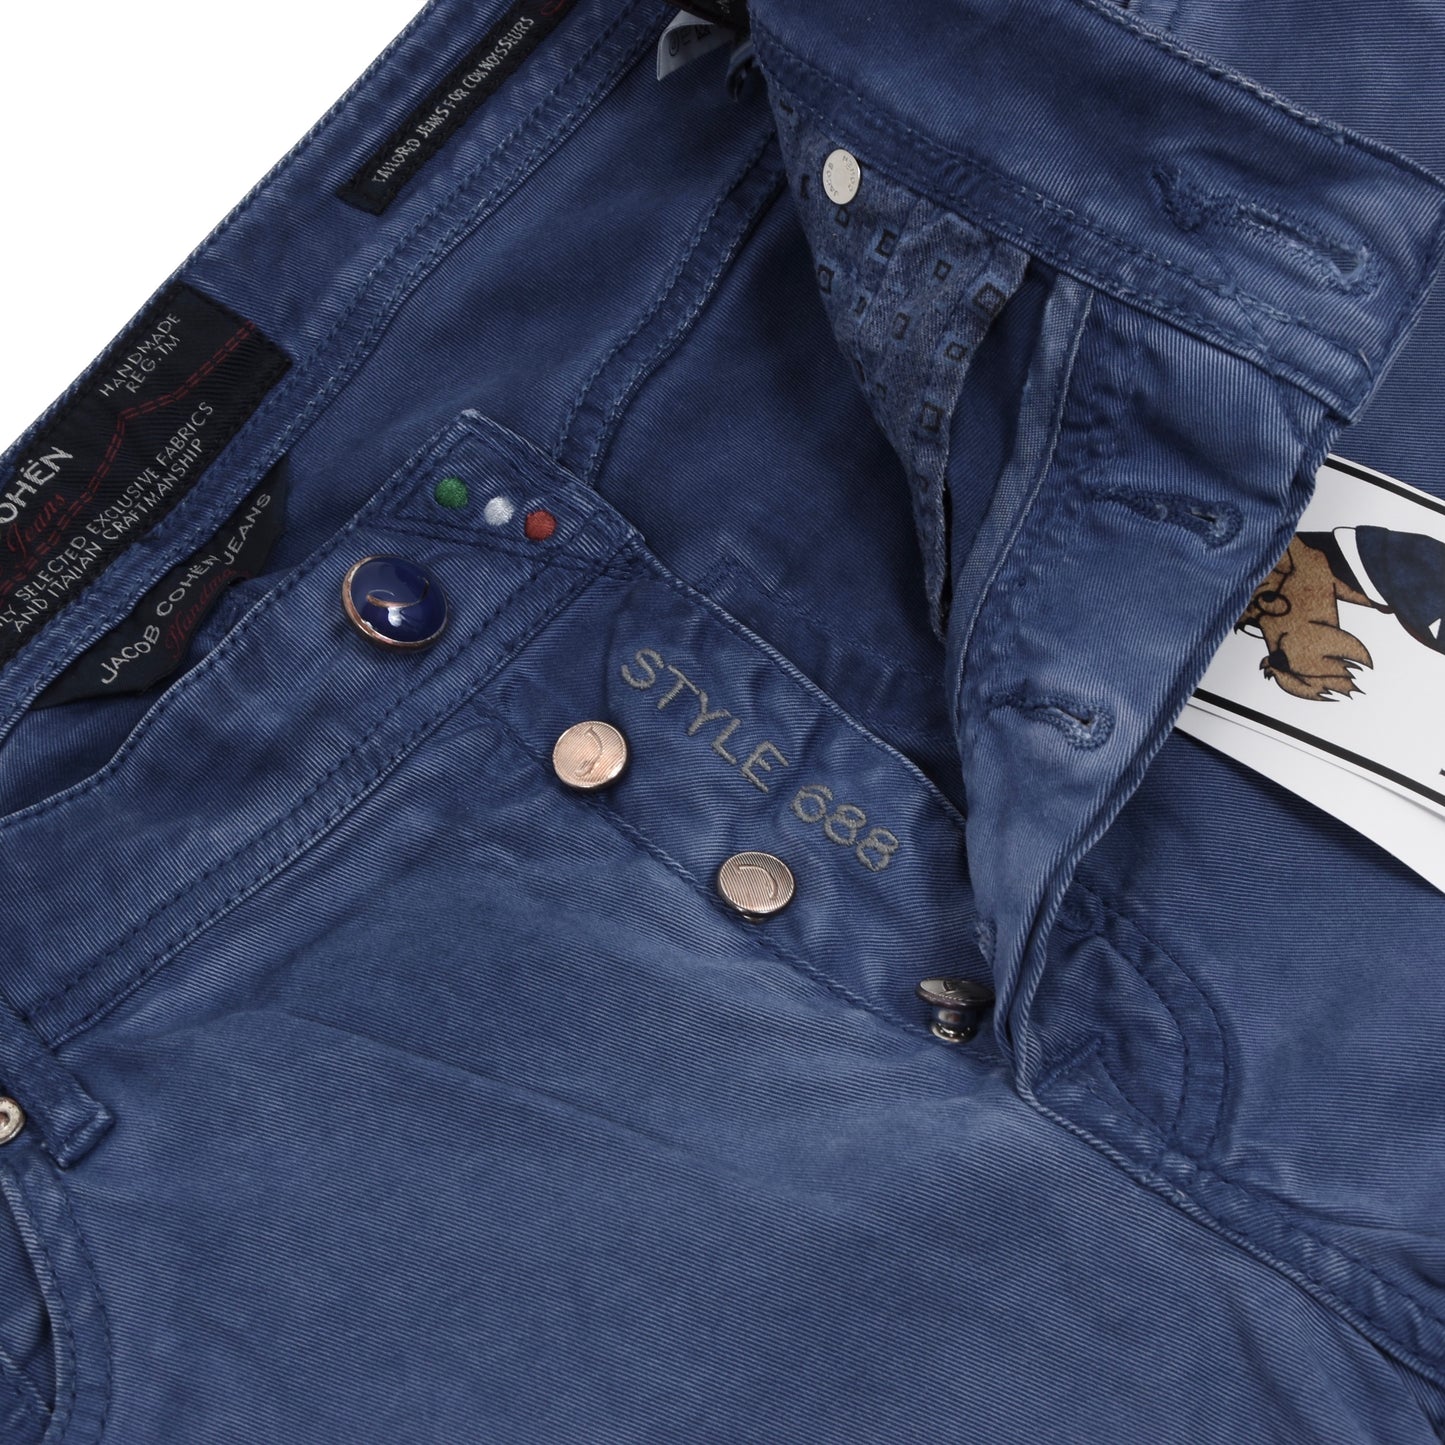 Jacob Cohen Jeans Modell 688 Größe W32 - Blau